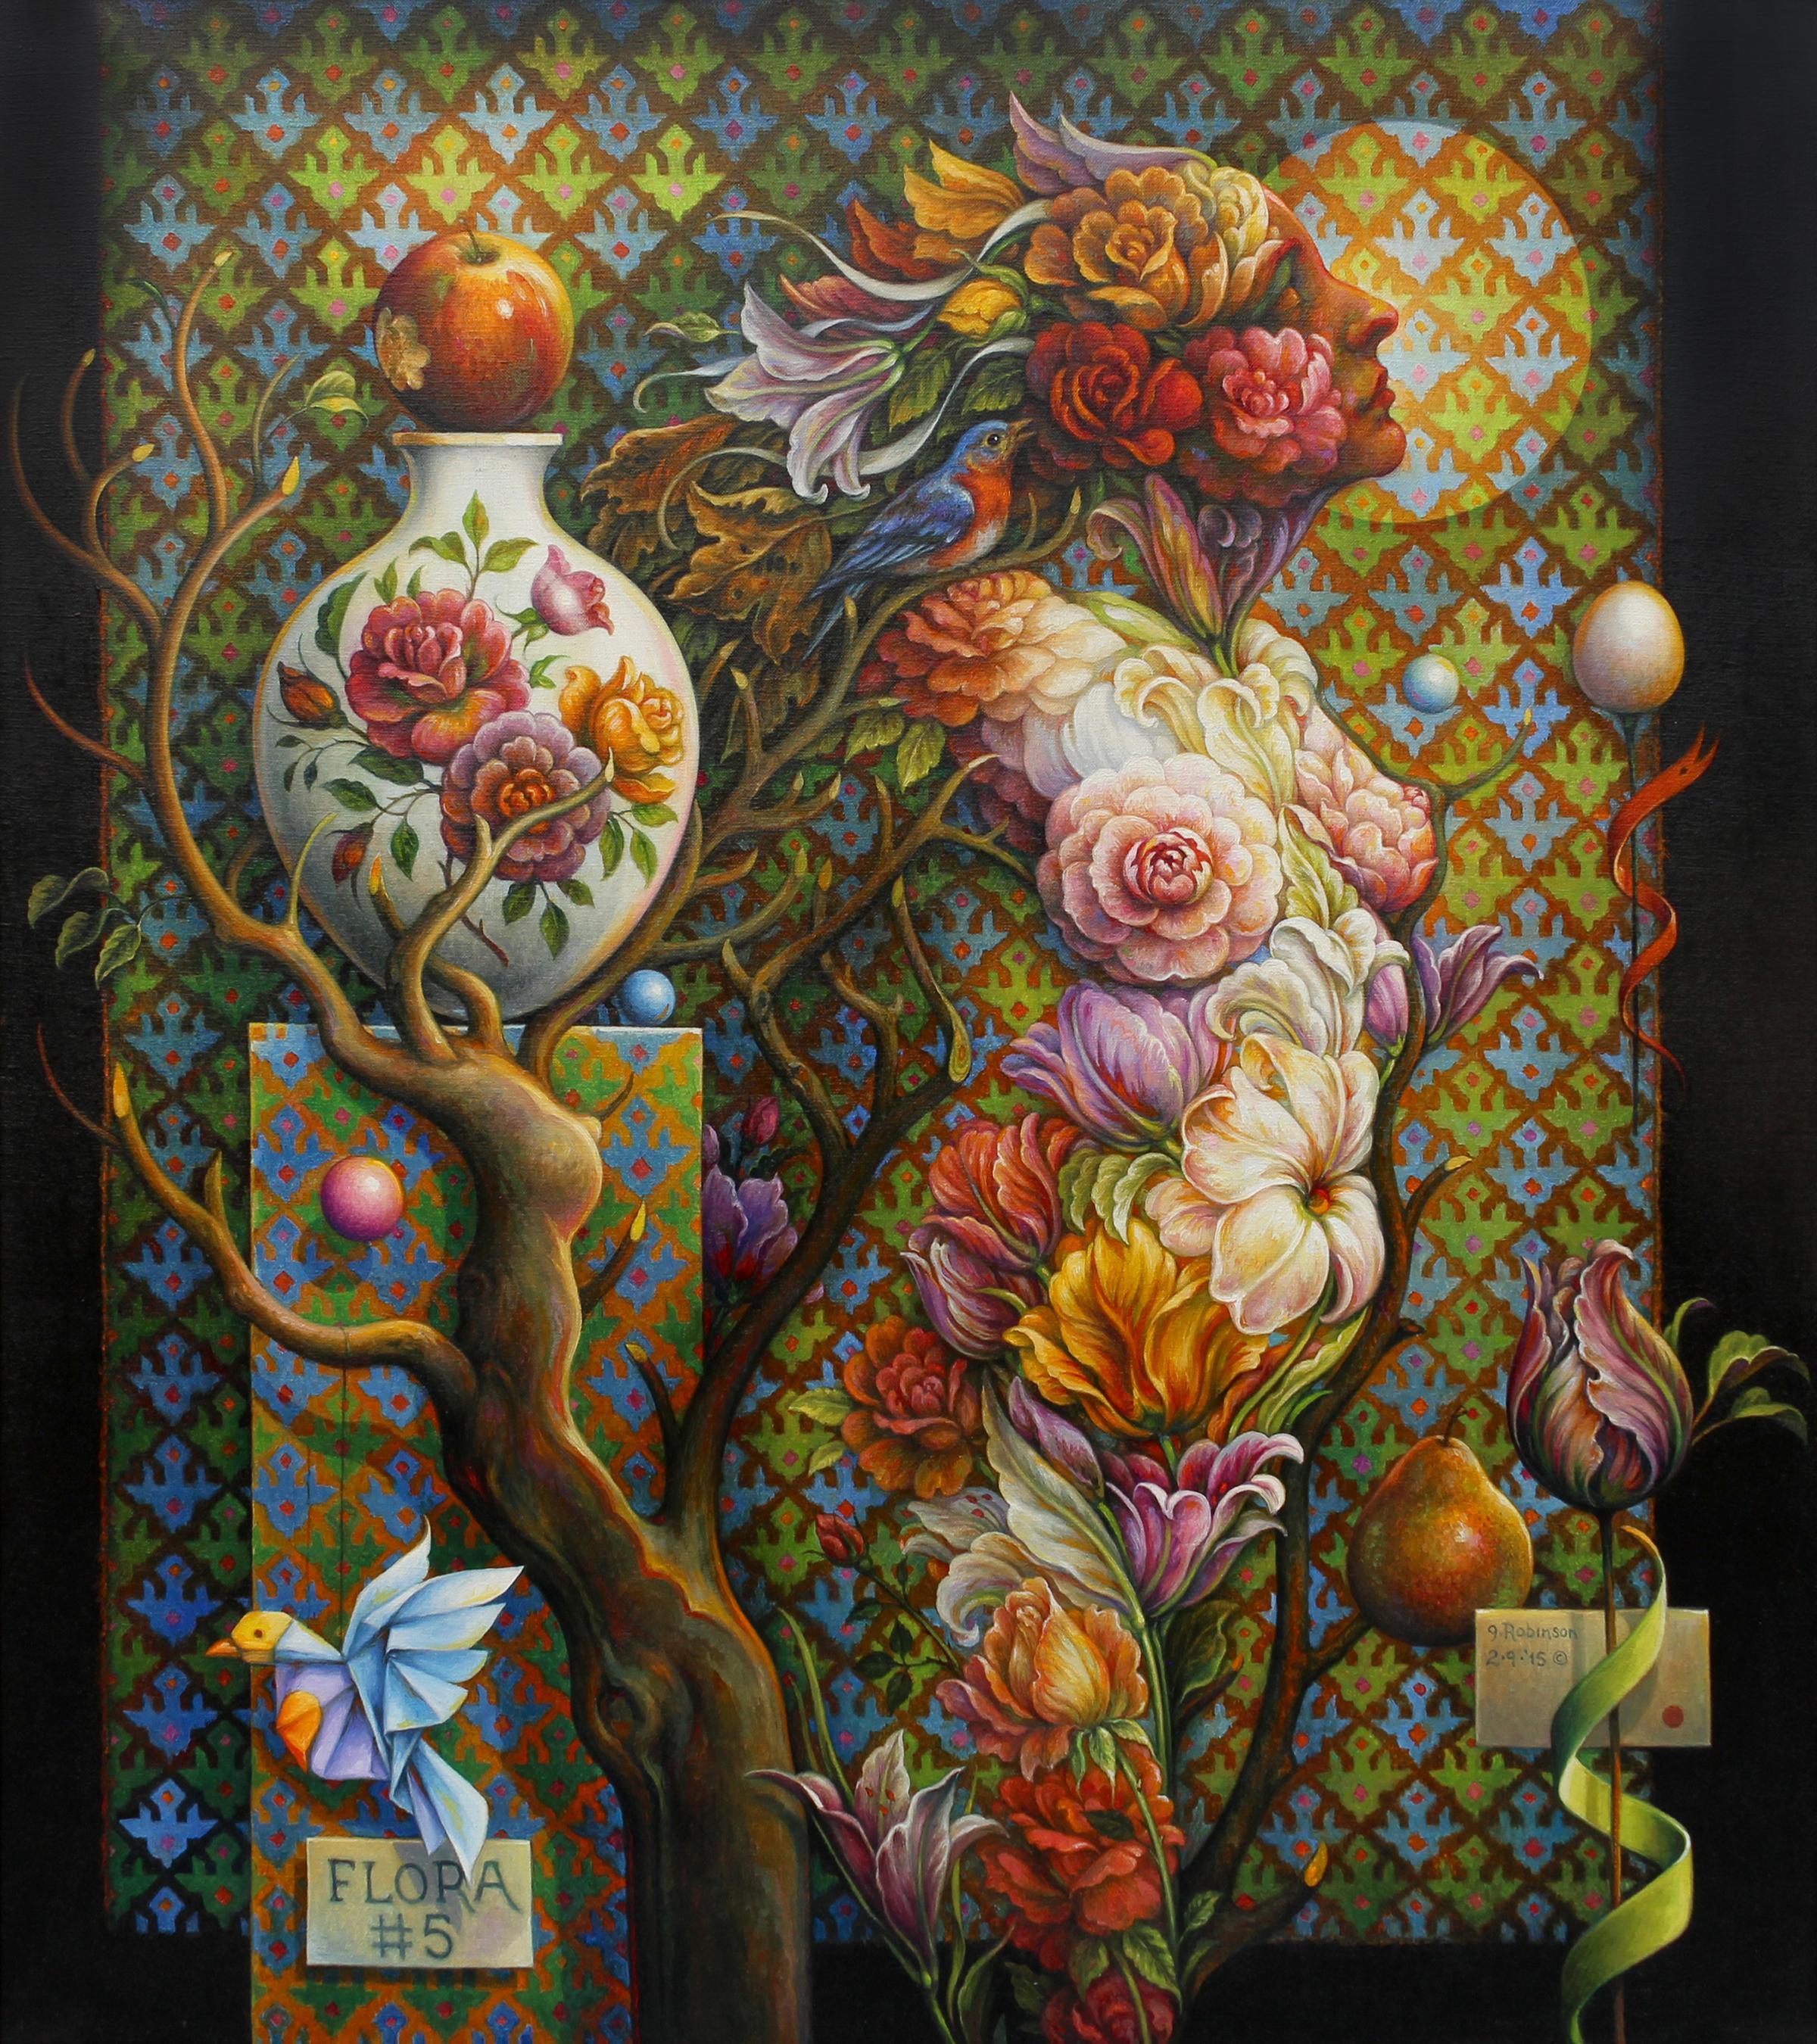 Guy Robinson Figurative Painting - "Floral #5" - Geometric Surrealist Painting - Nude - Arcimboldo